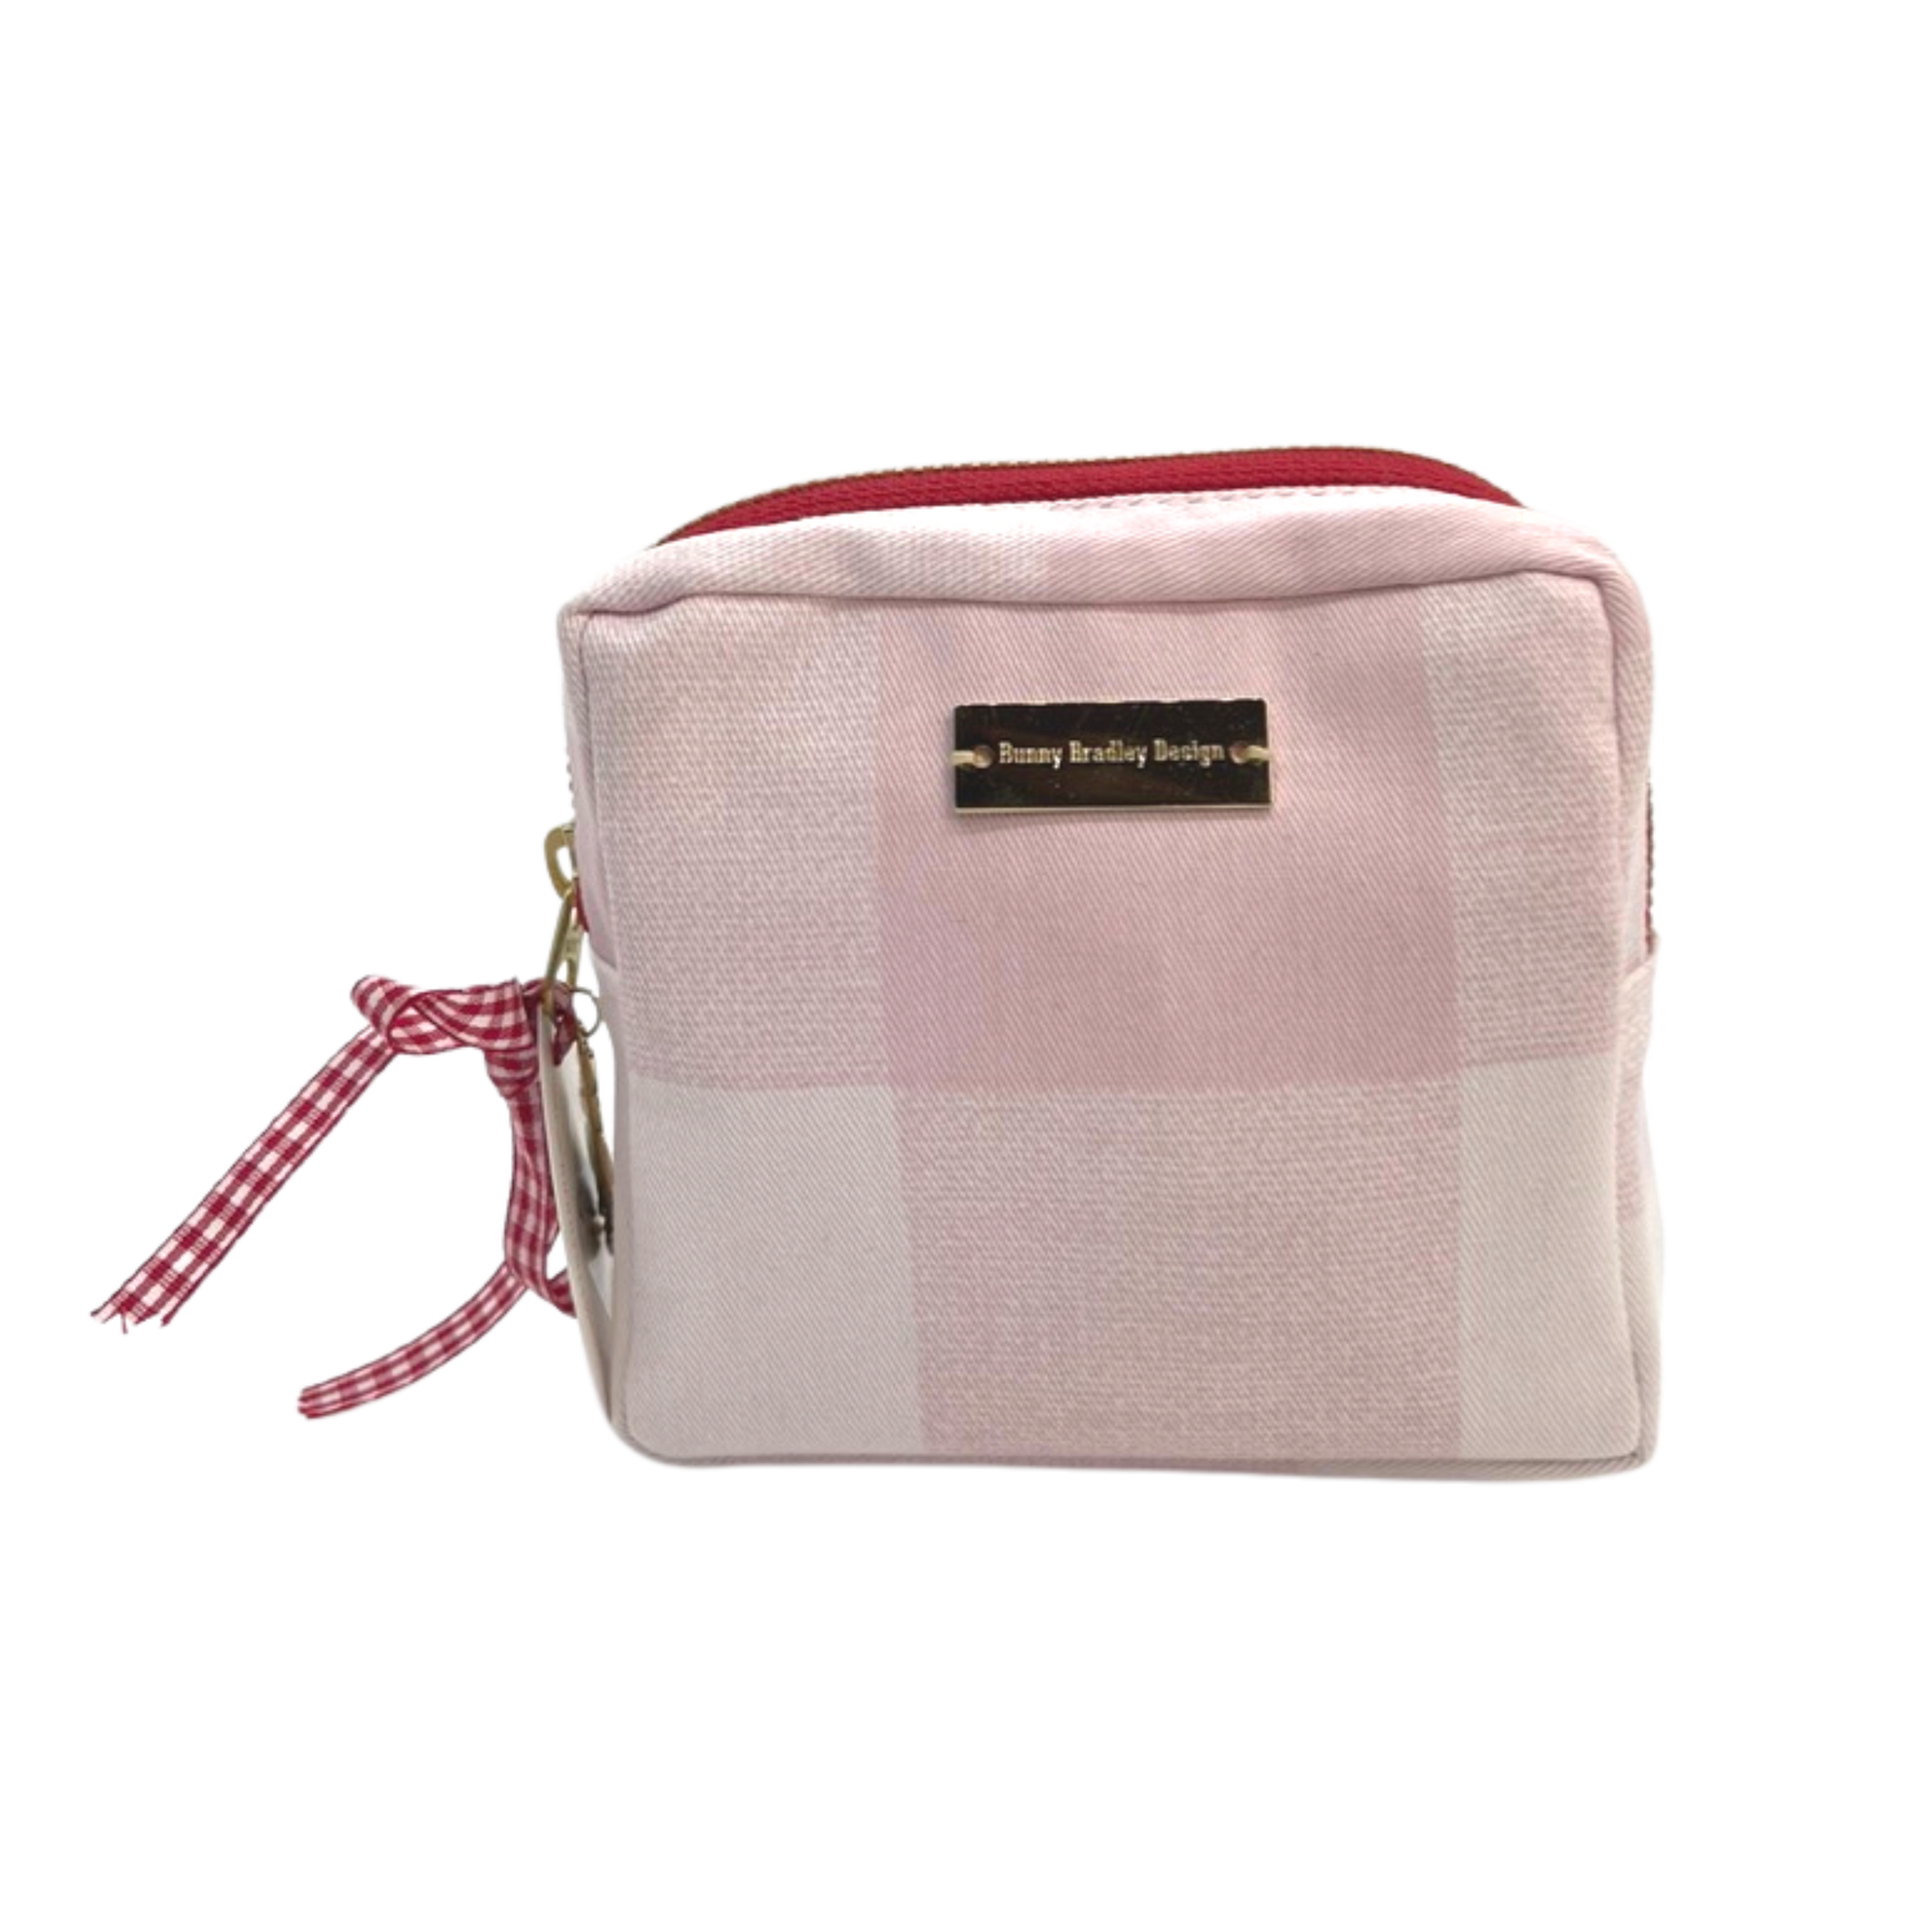 Bunny Bradley Marin Small Cosmetic Bag, Assorted